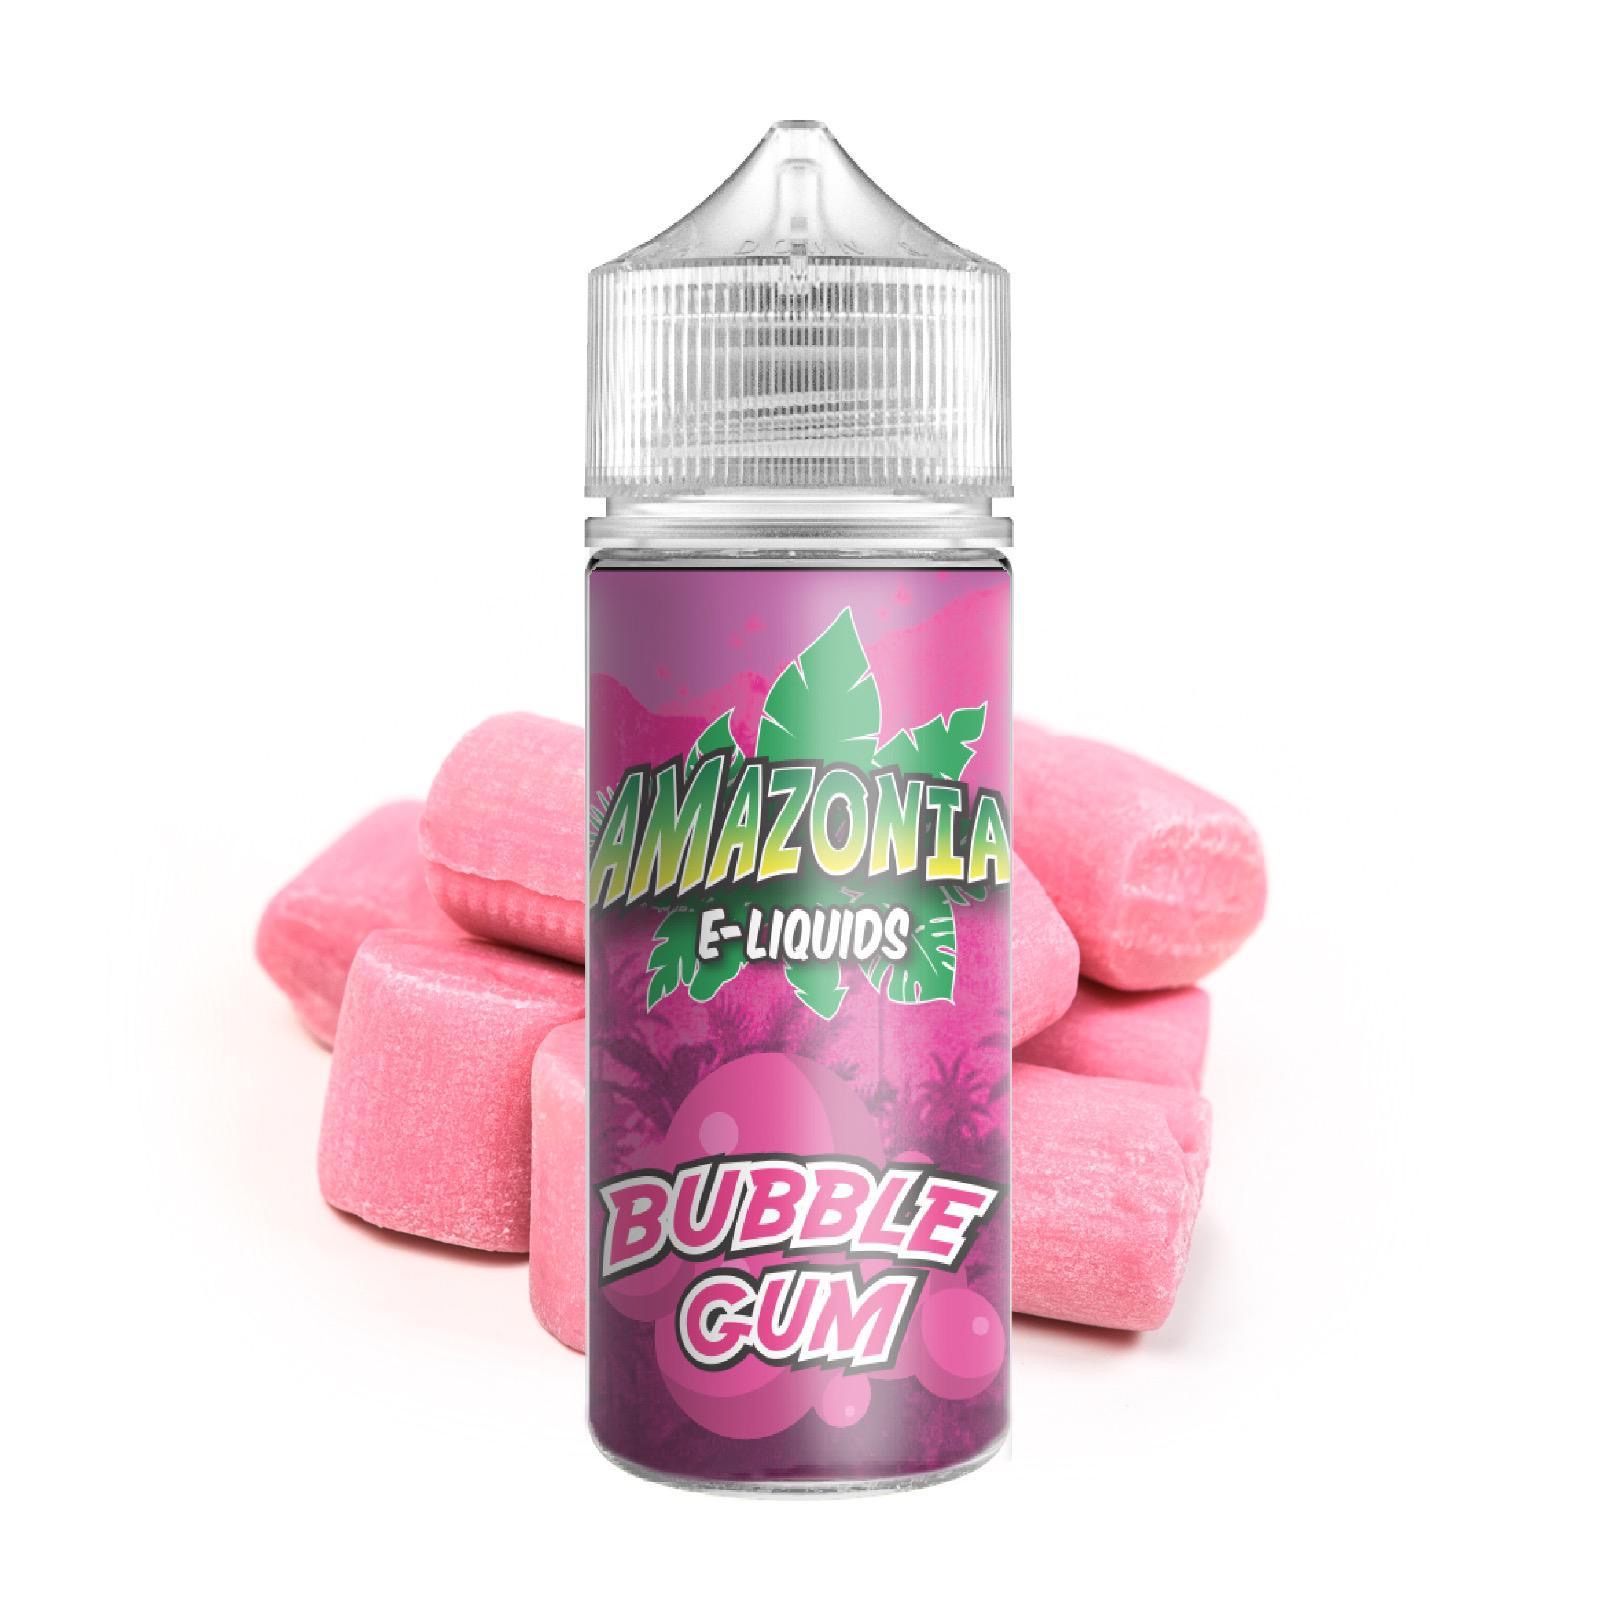 Amazonia 100ml - Bubble Gum